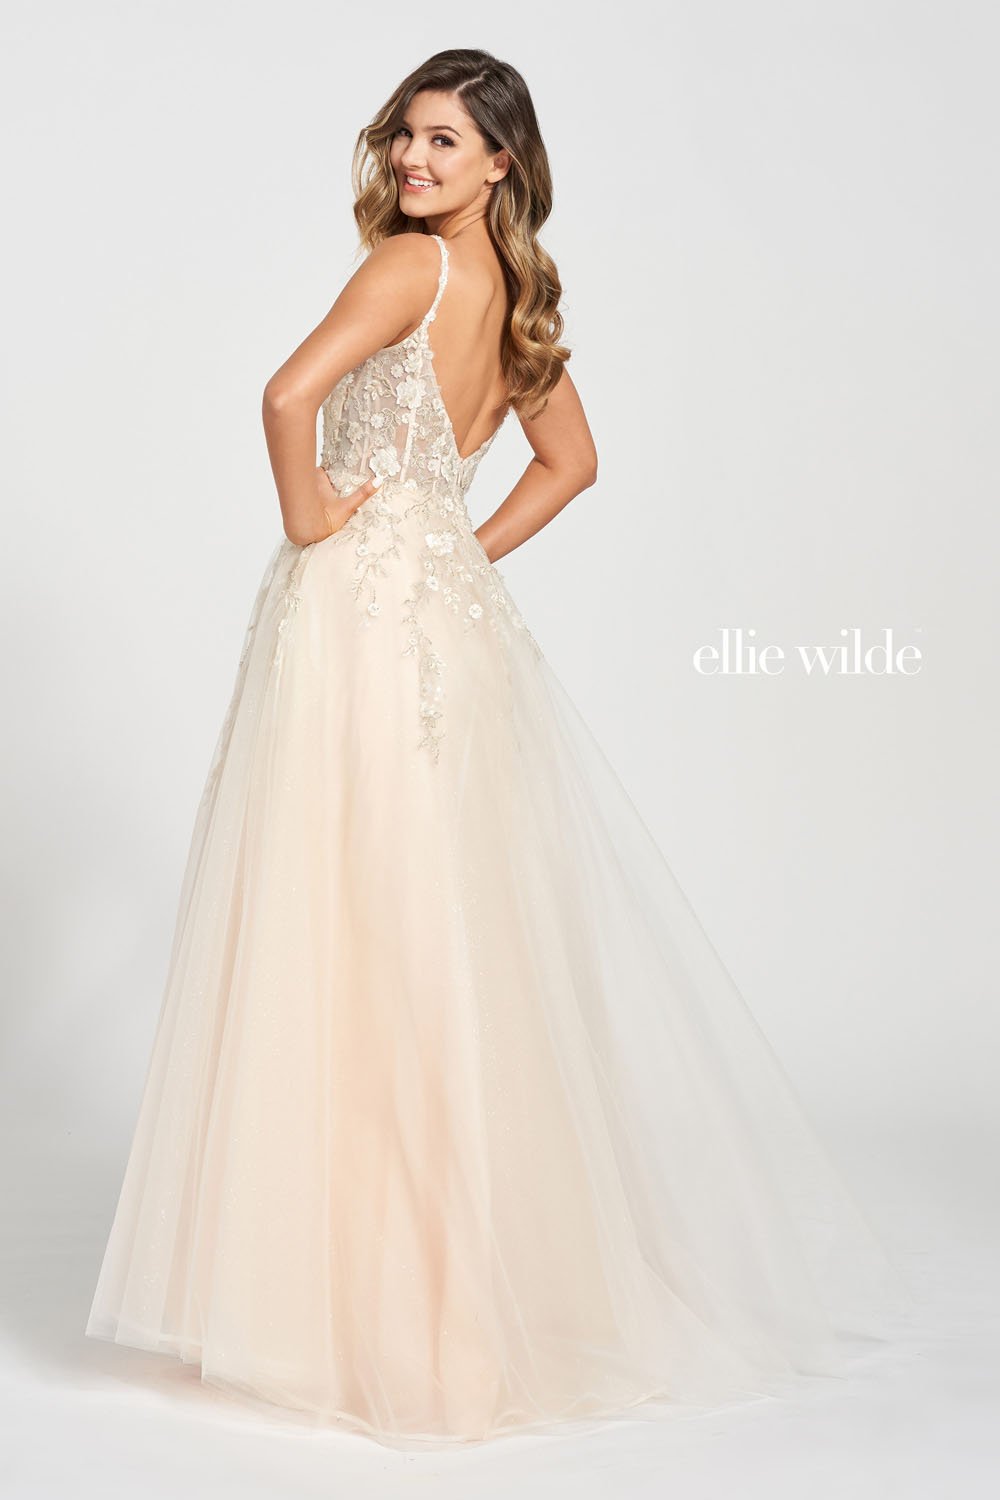 Ellie Wilde Ivory Vanilla EW122117 Prom Dress Image.  Ivory Vanilla formal dress.